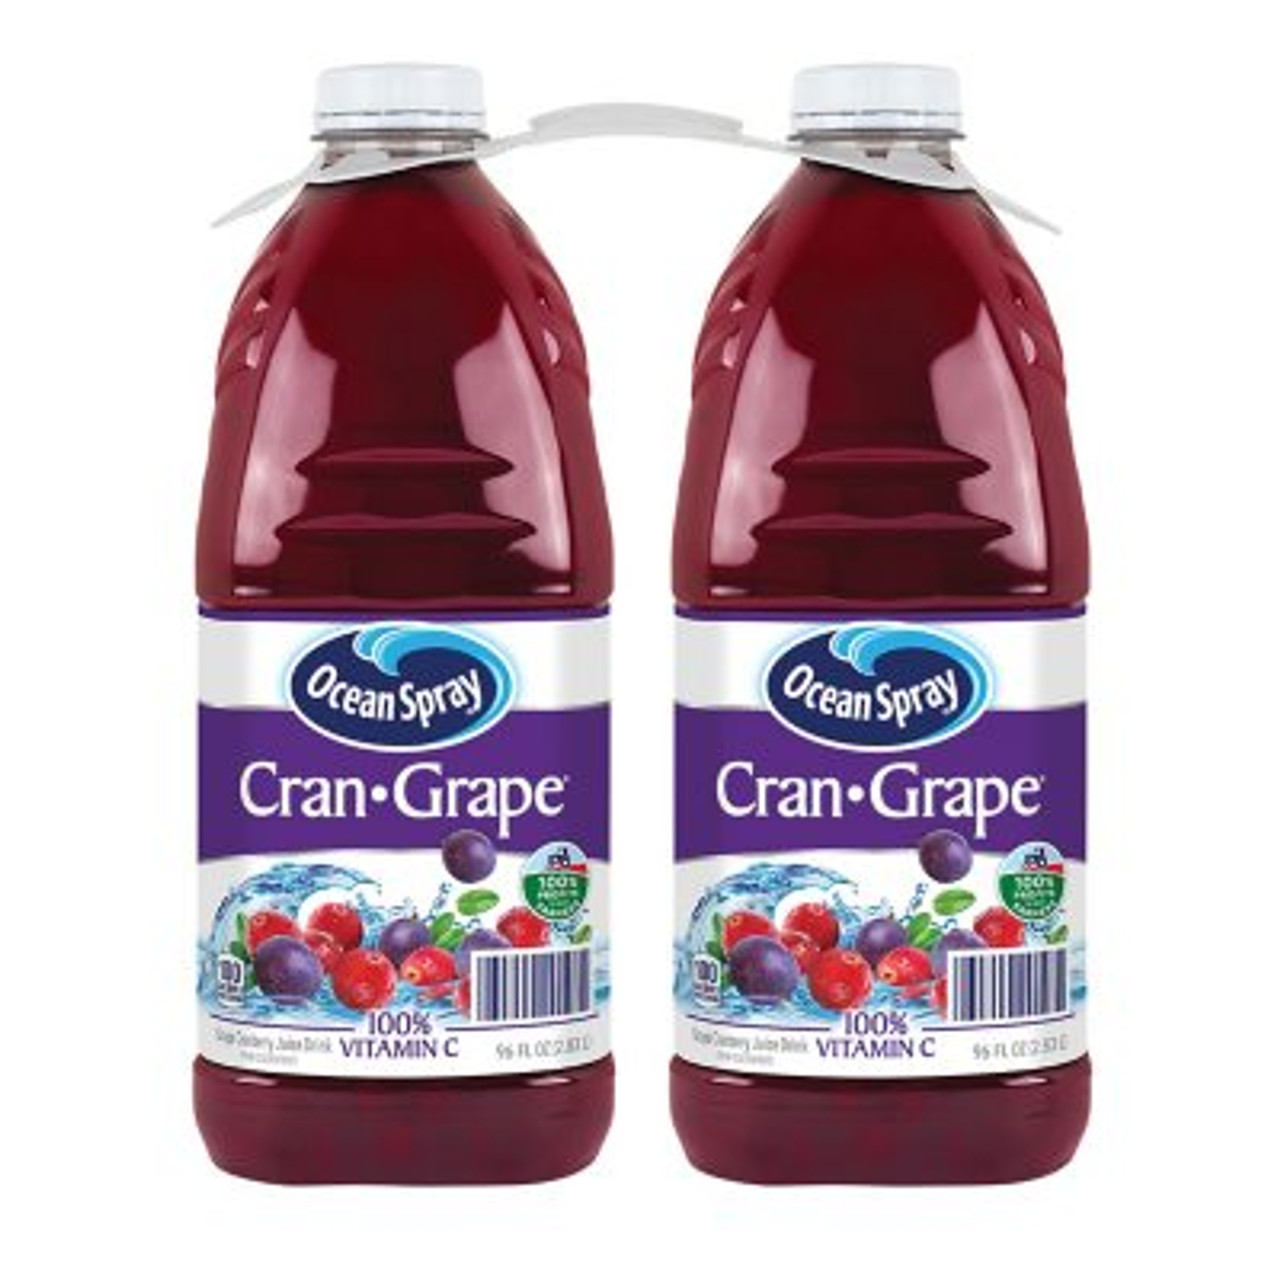 Ocean Spray Cran-Grape Juice Drink (96oz / 2pk) - [From 44.00 - Choose pk Qty ] - *Ships from Miami